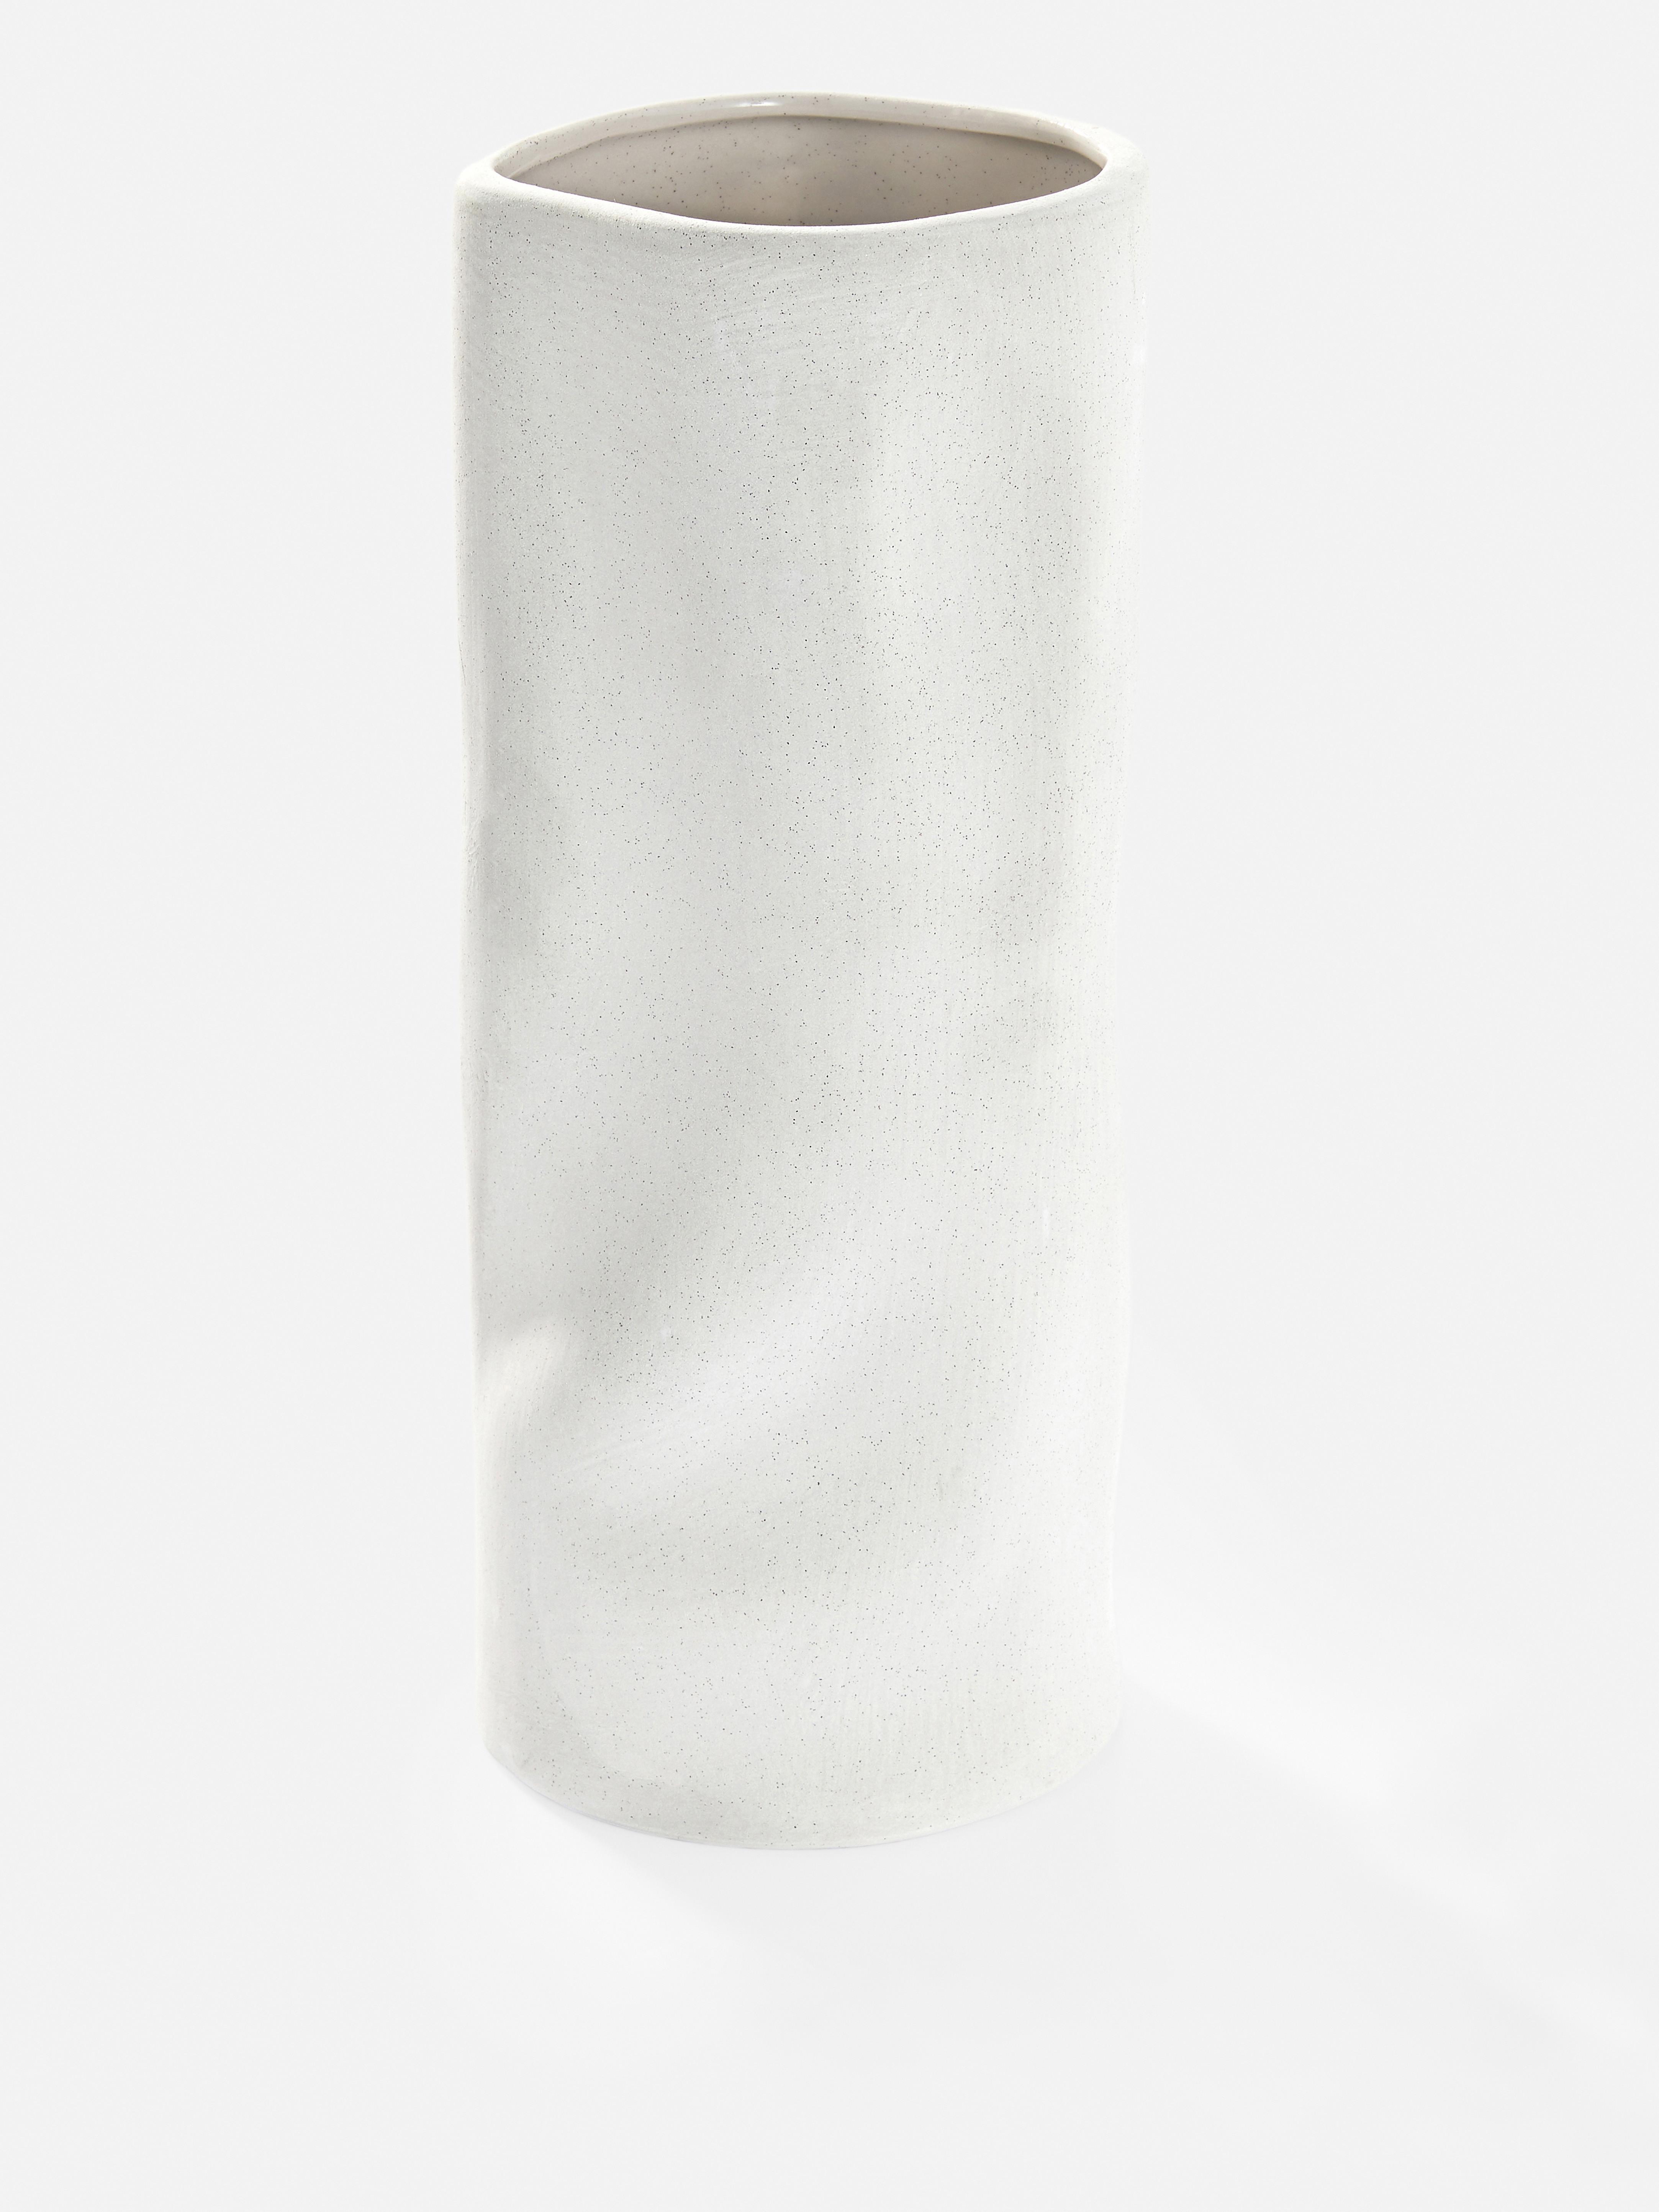 Organic Shape Tall Vase